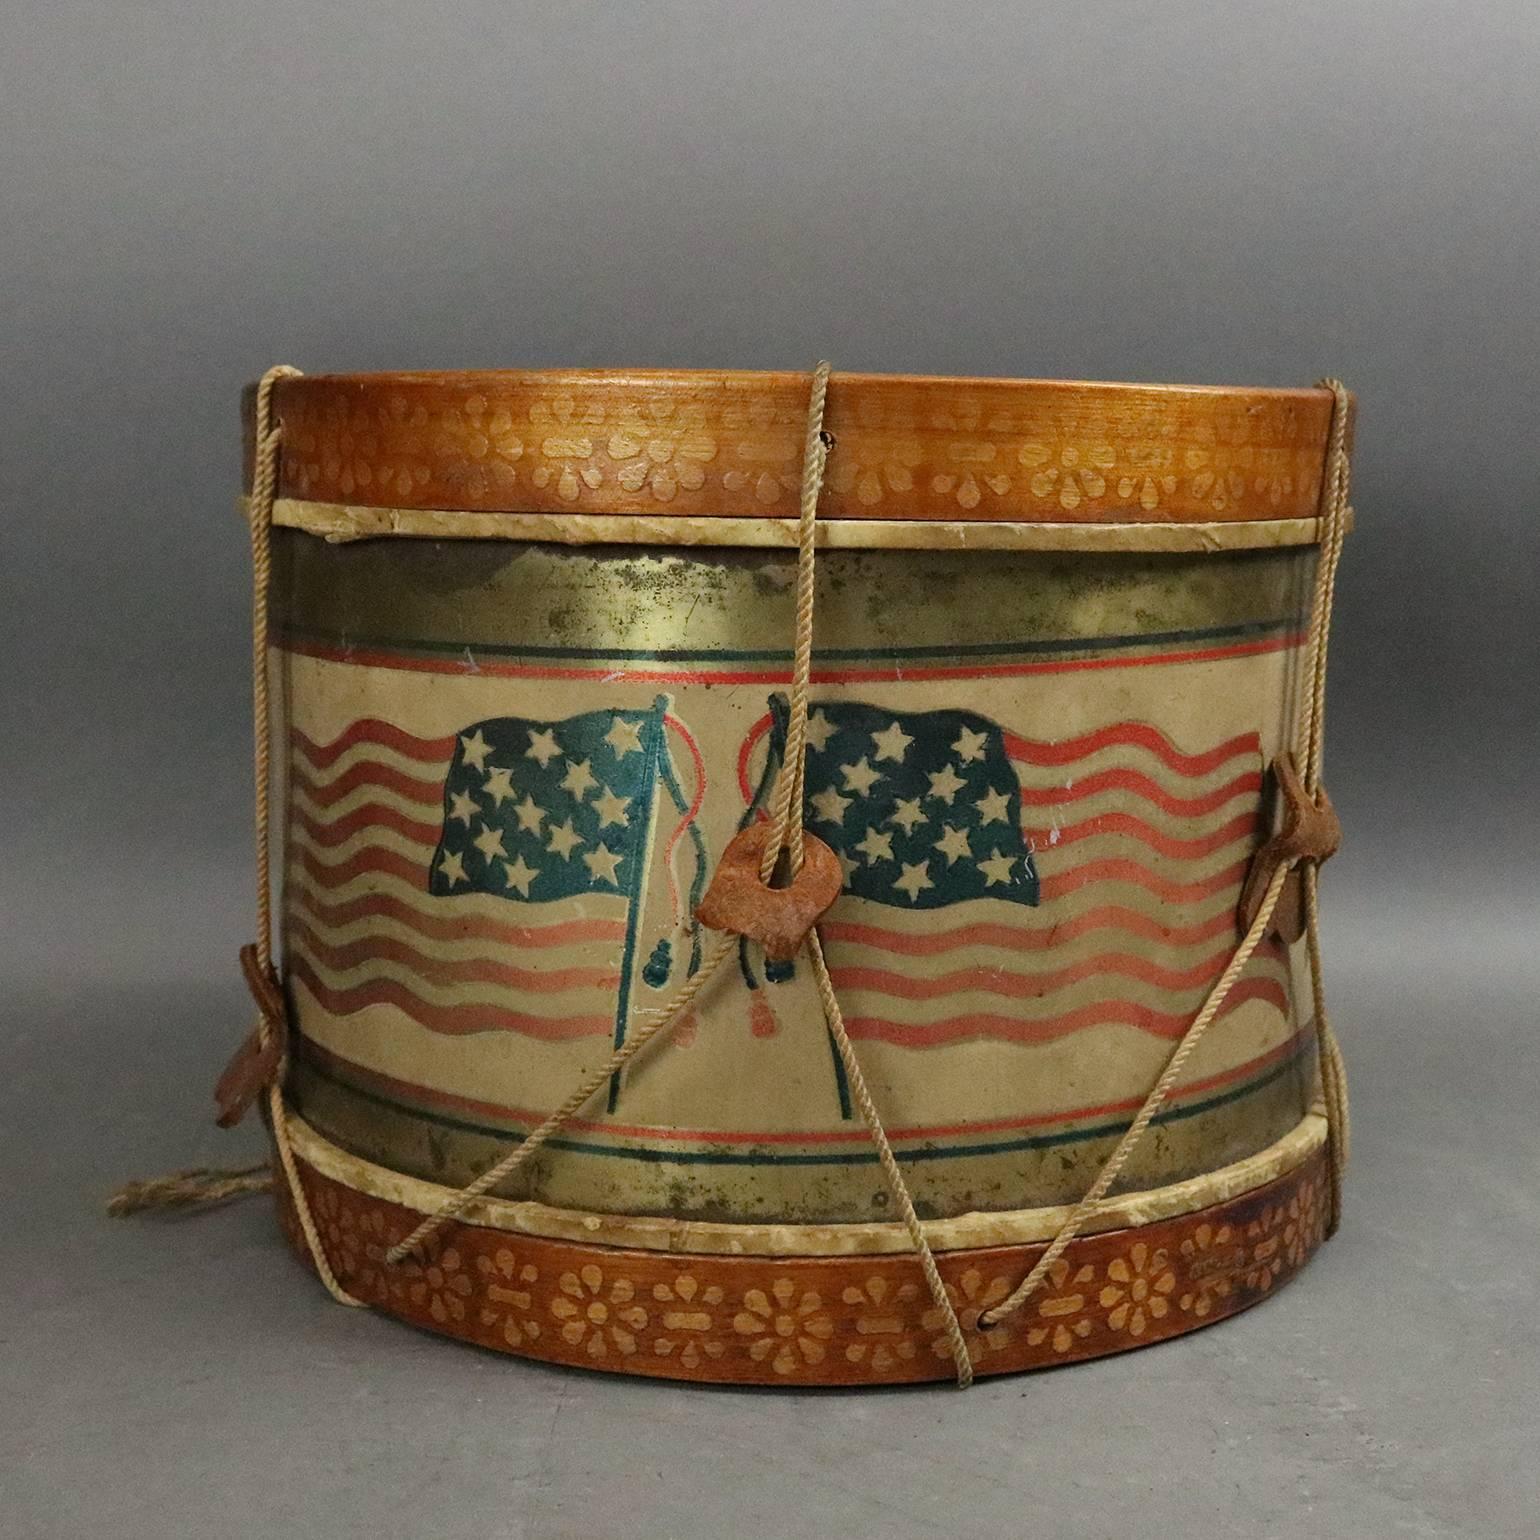 Painted Americana Folk Art Patriotic Tin Drum, Stars and Stripes, circa 1900